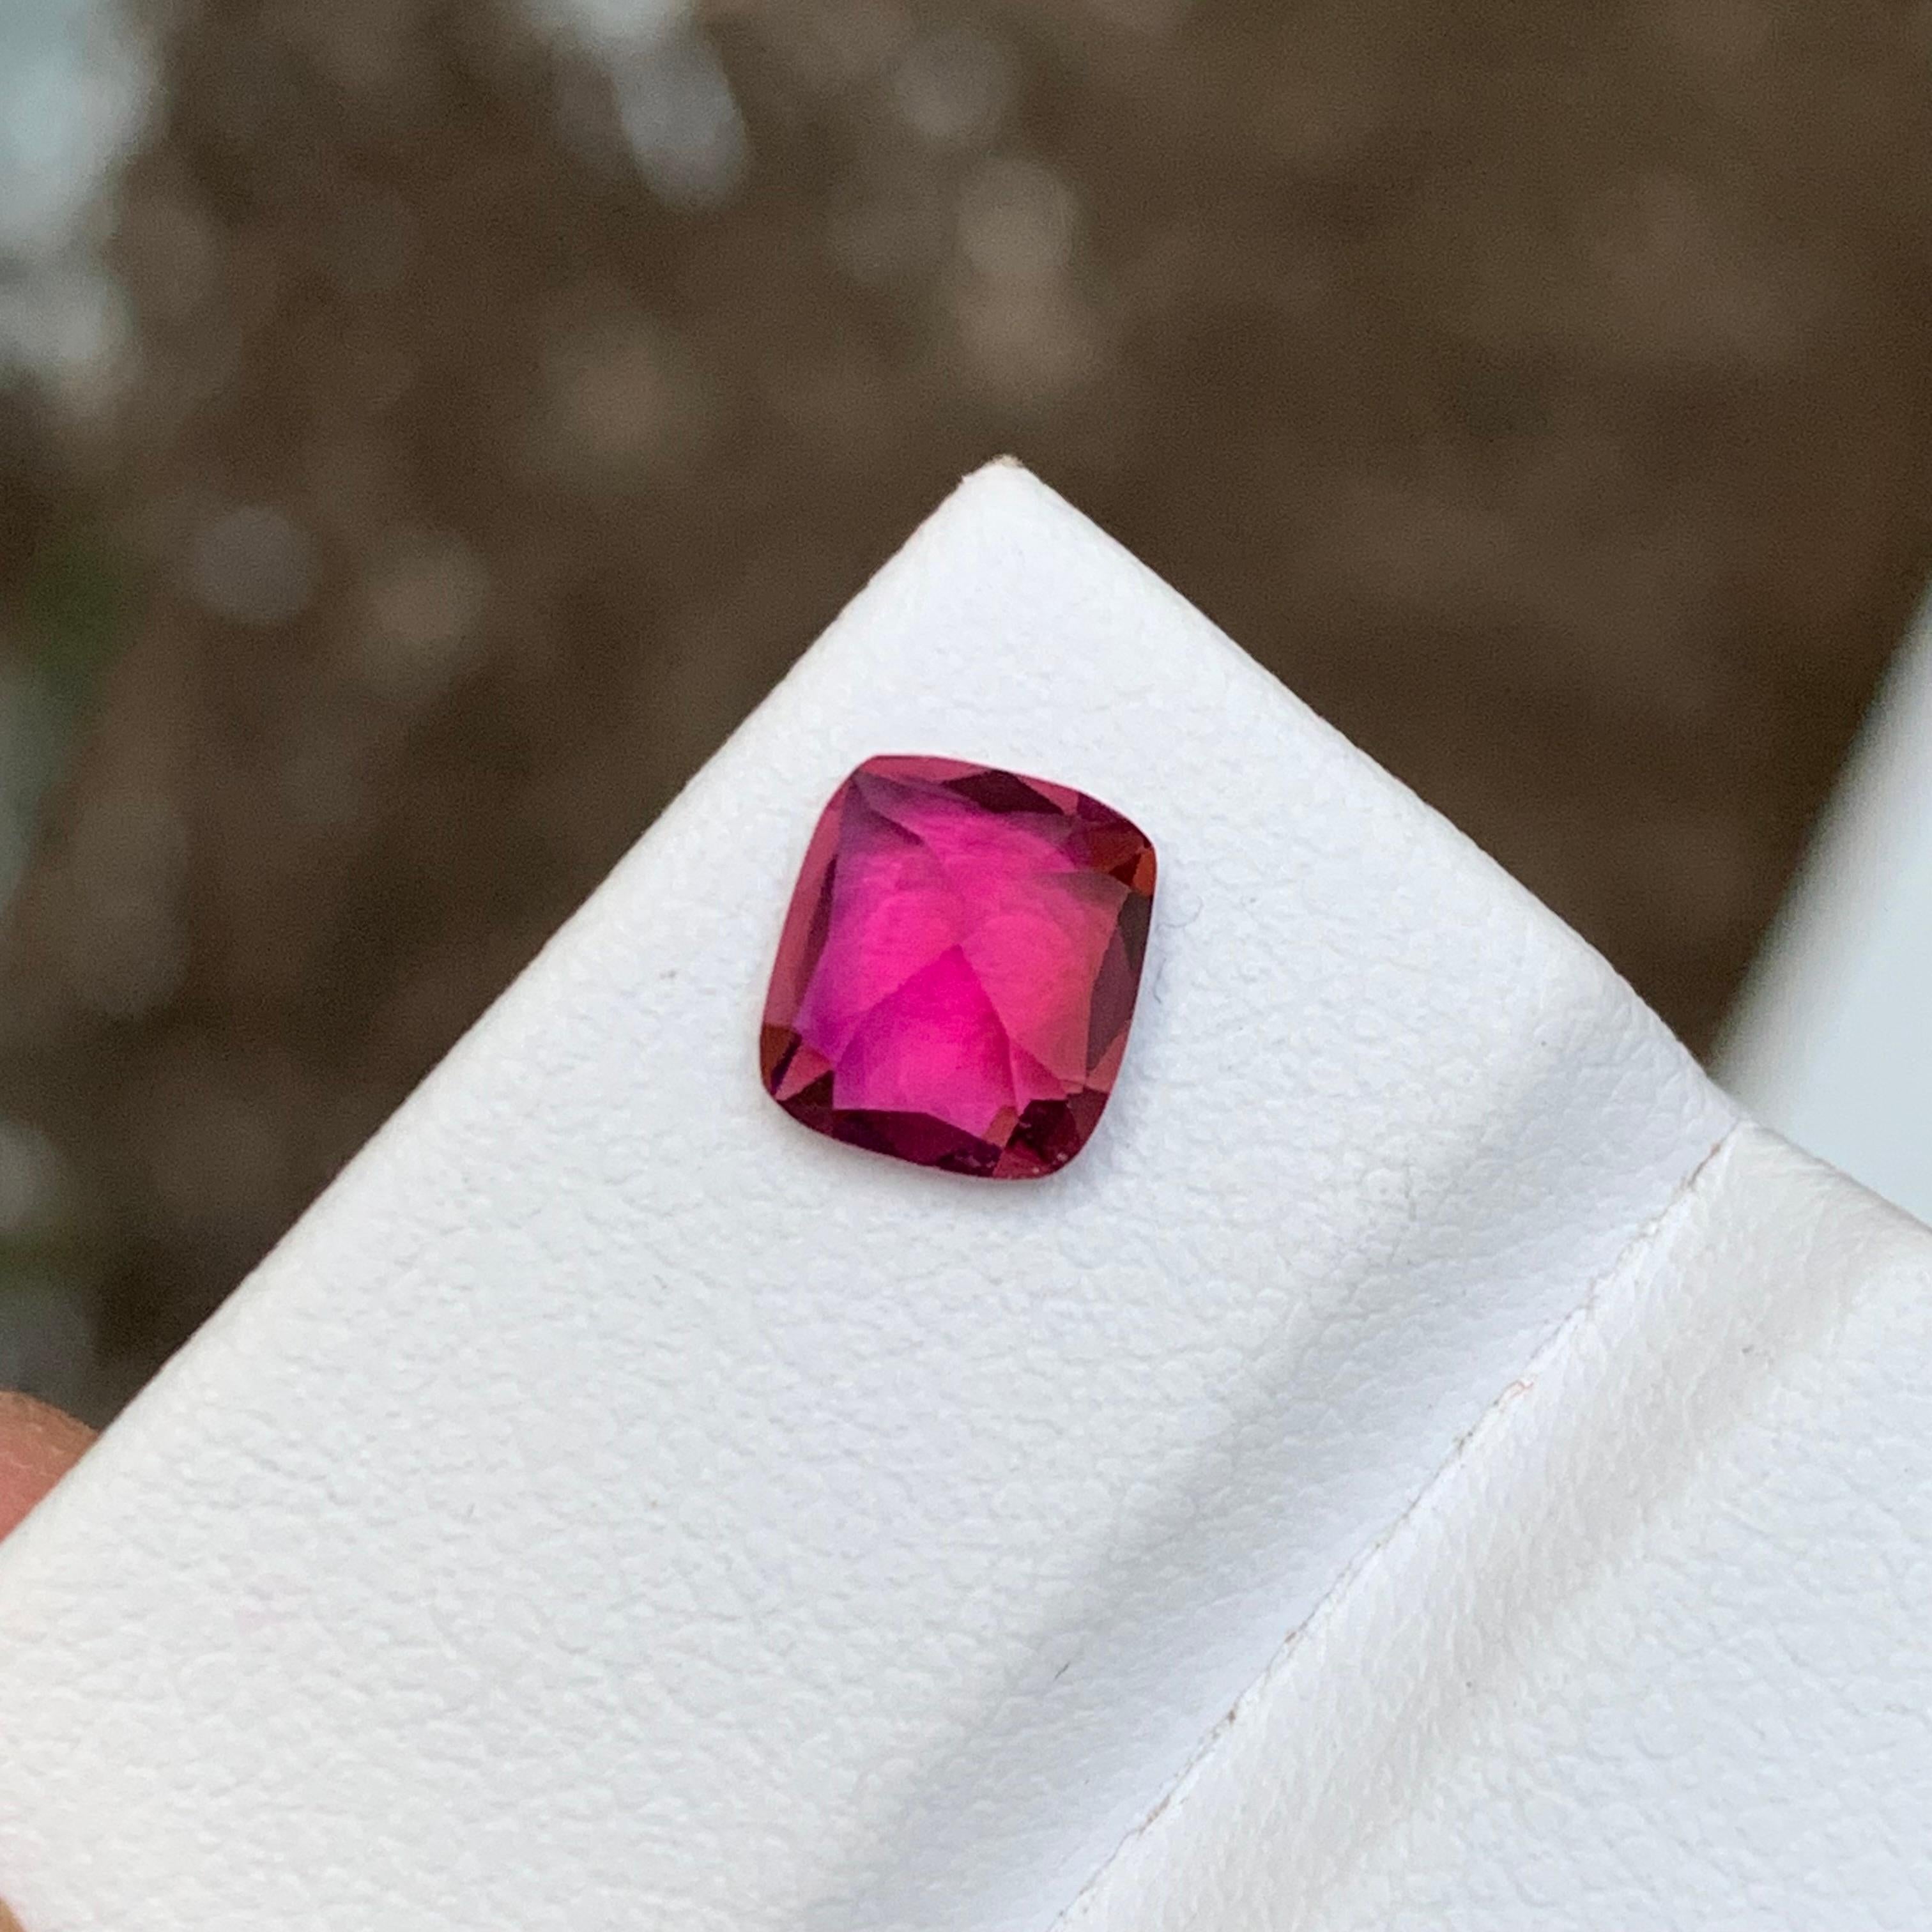 Rare Reddish Pink Rubellite Tourmaline Gemstone, 1.20 Ct Cushion Cut for Ring For Sale 4